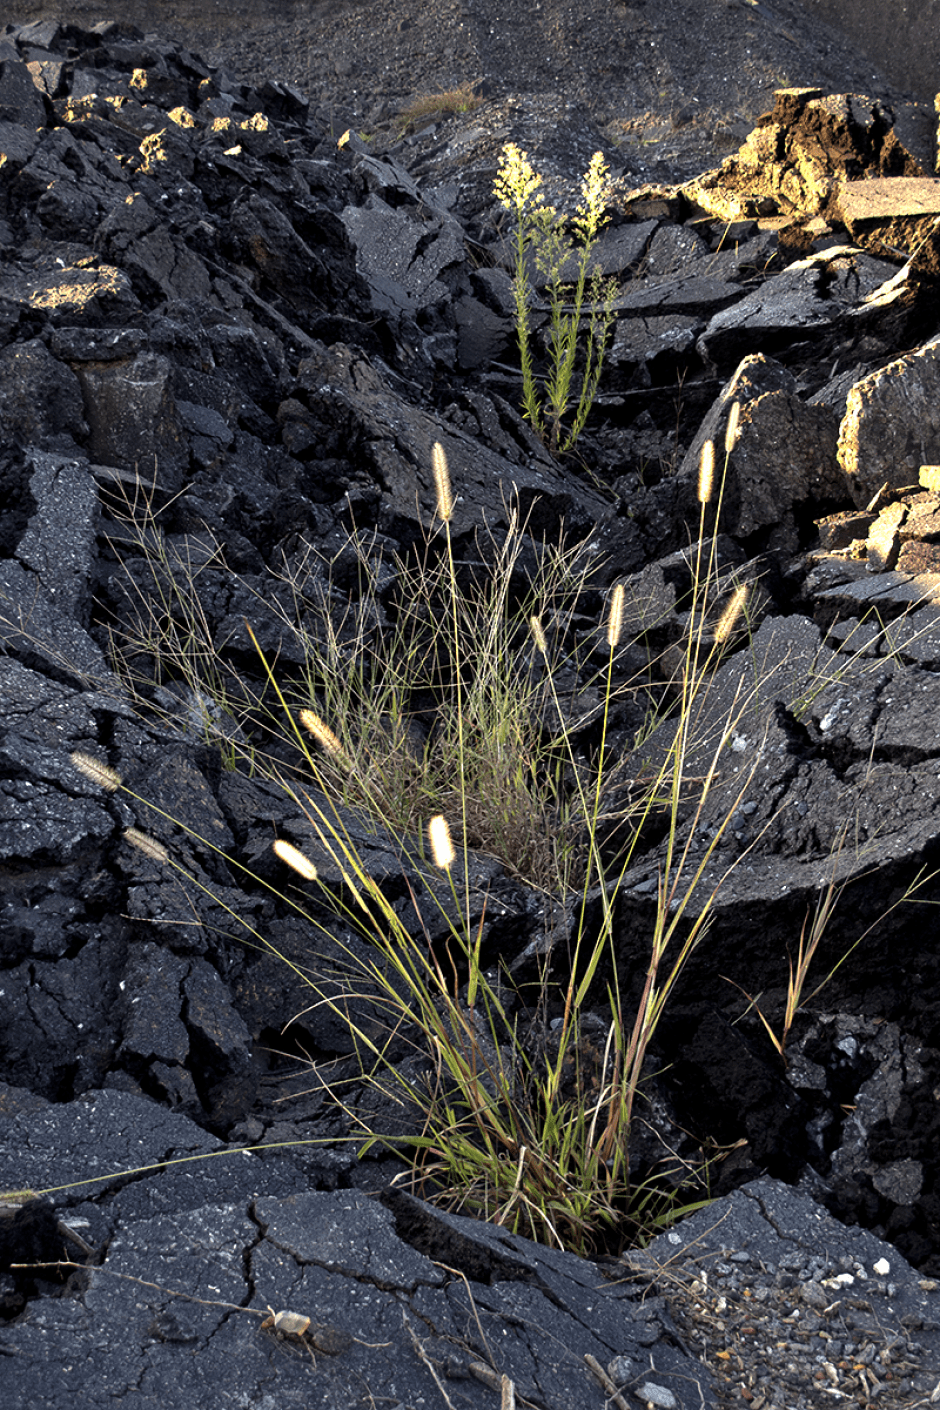 Foxtail grass in asphalt resembling a lava field. Photo: Meredith Hebden